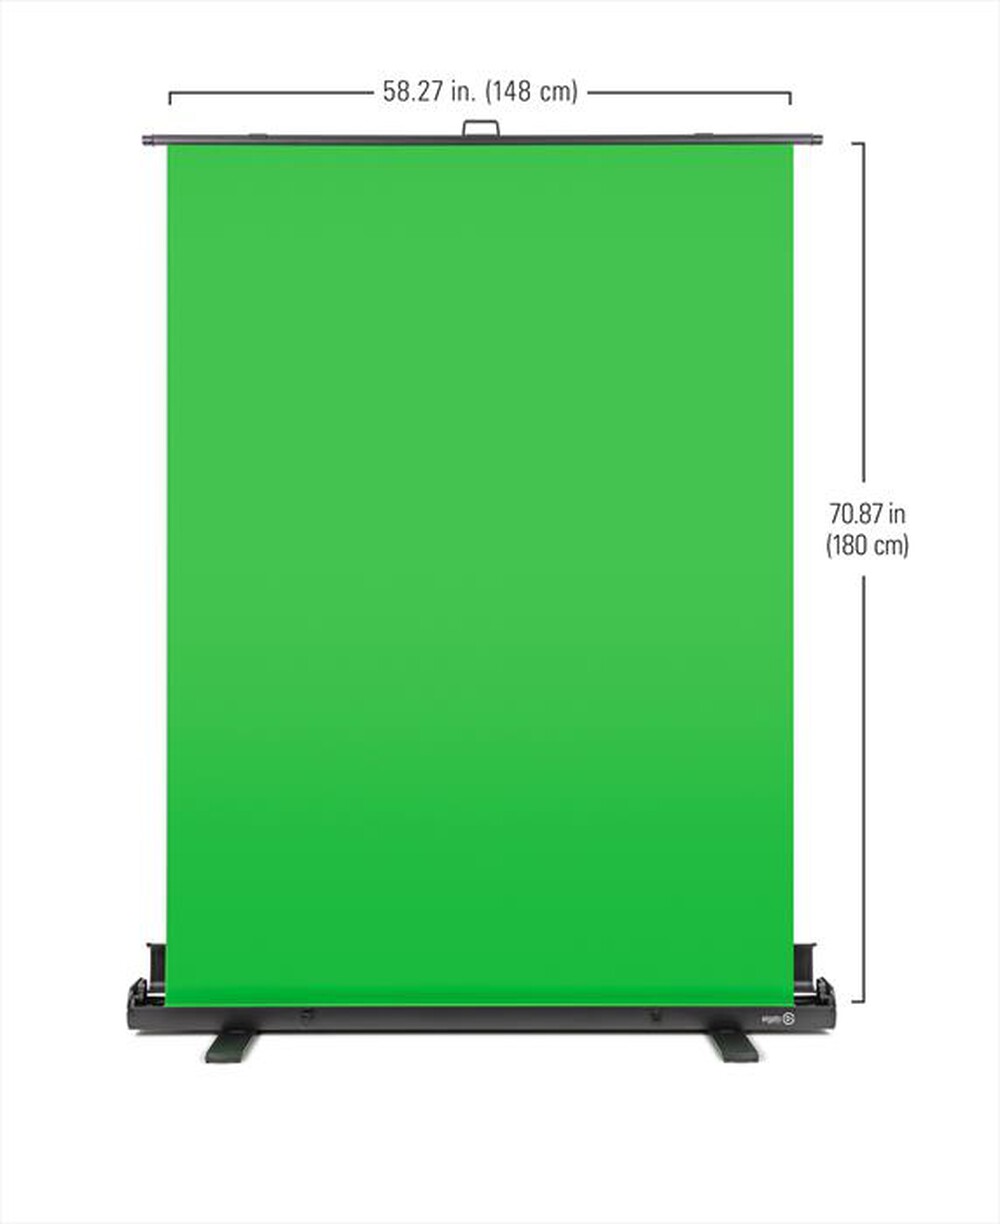 "ELGATO - Green Screen"